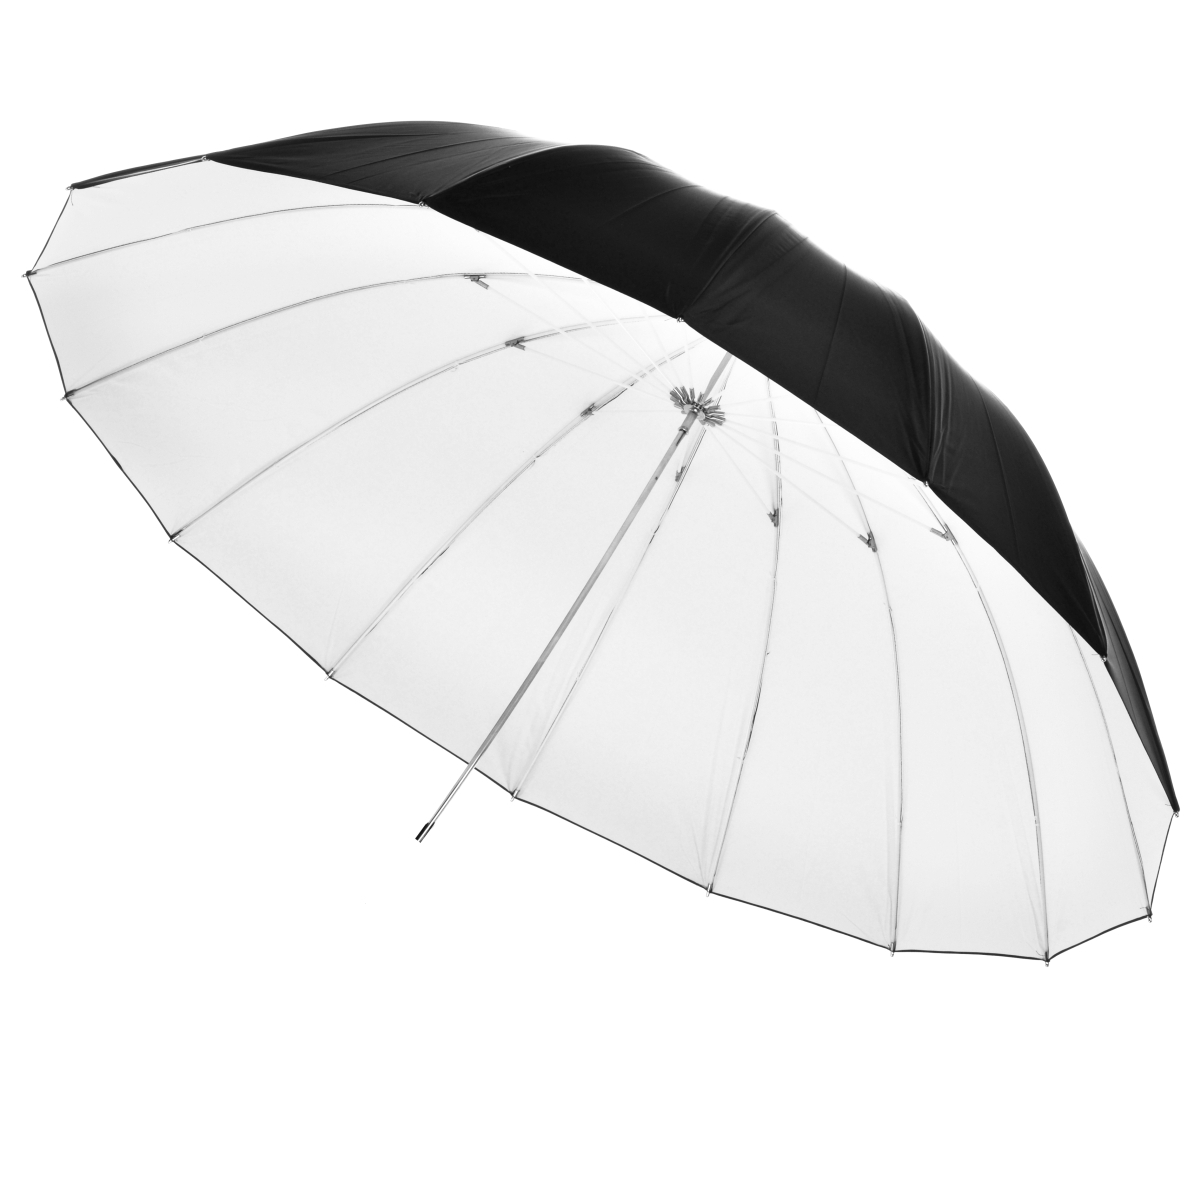 Walimex Reflex Umbrella black/white, 180cm